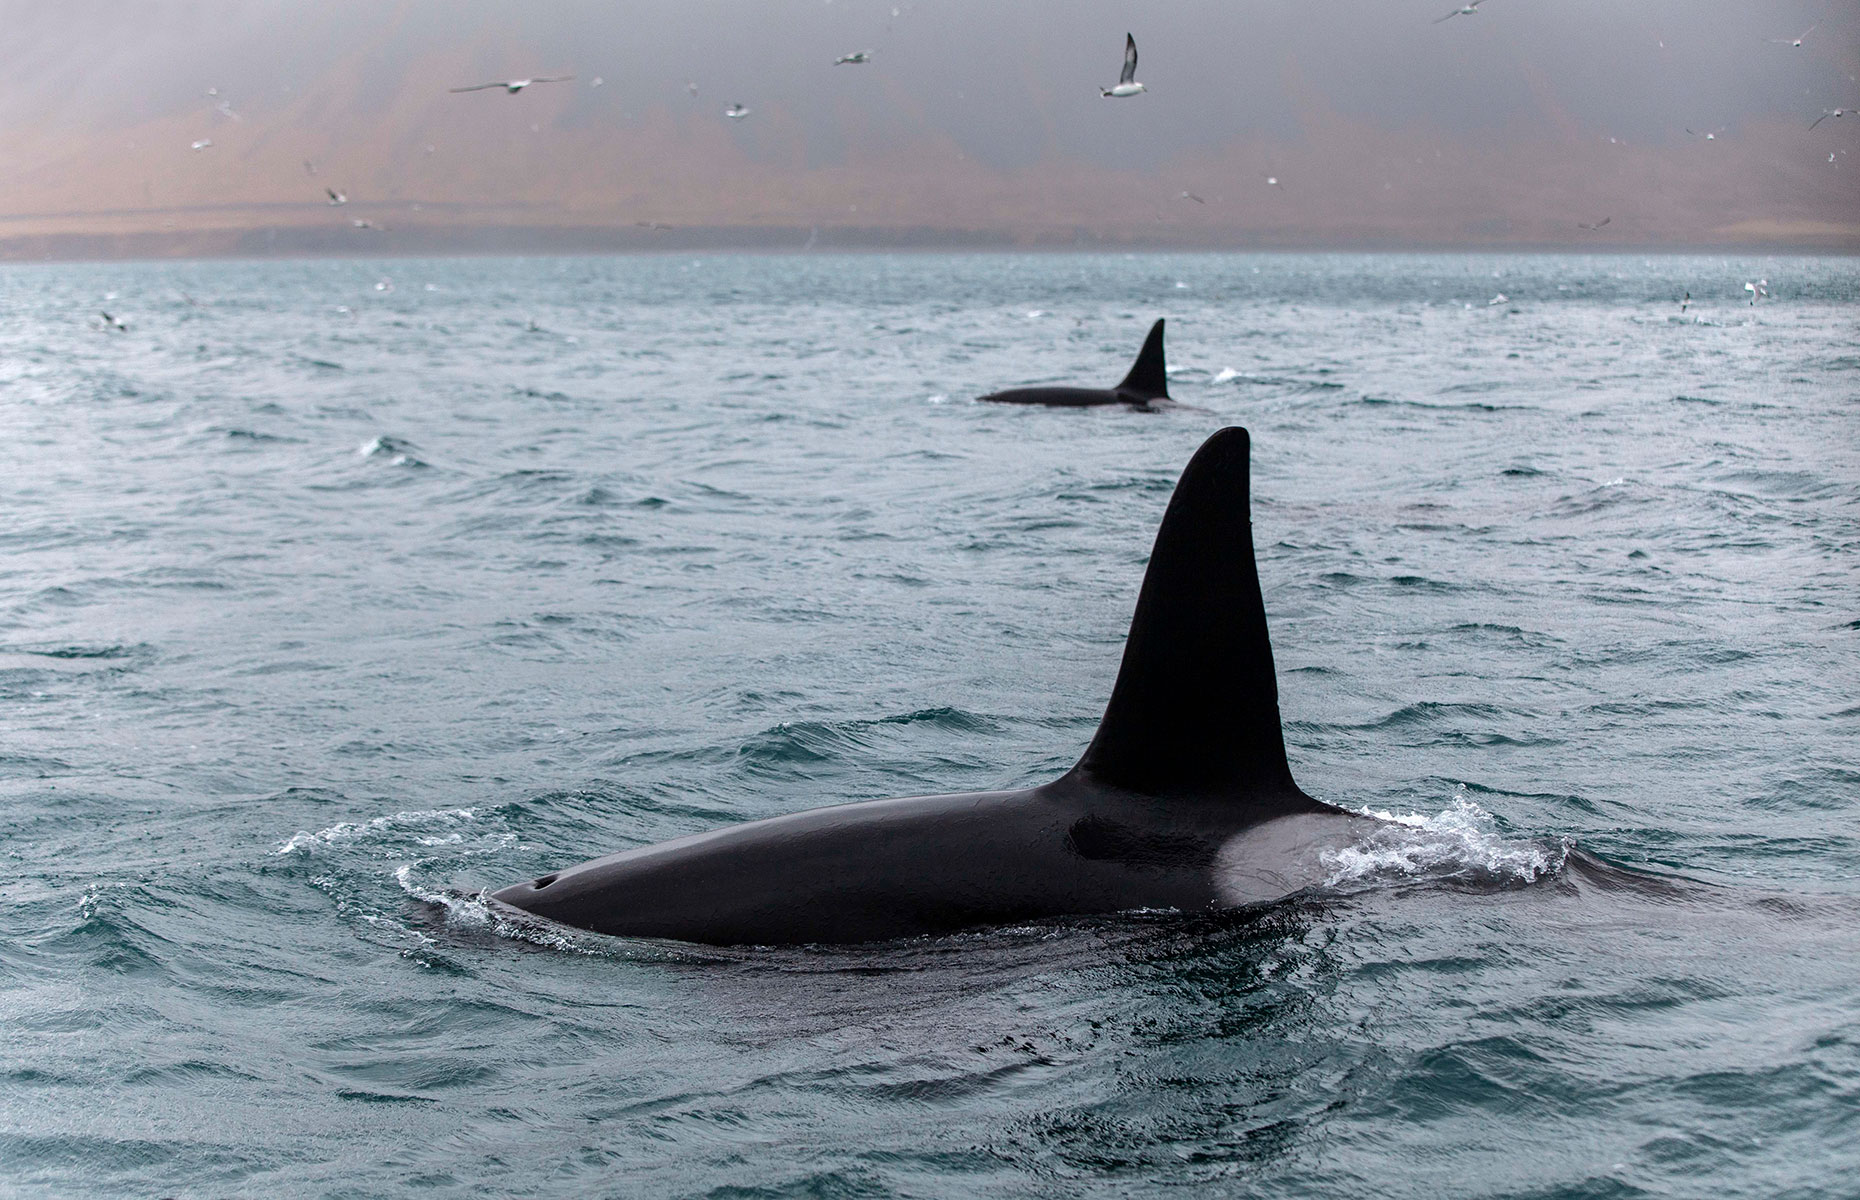 Orcas off the coast of Iceland (Image: Copyright Nori Jemil)